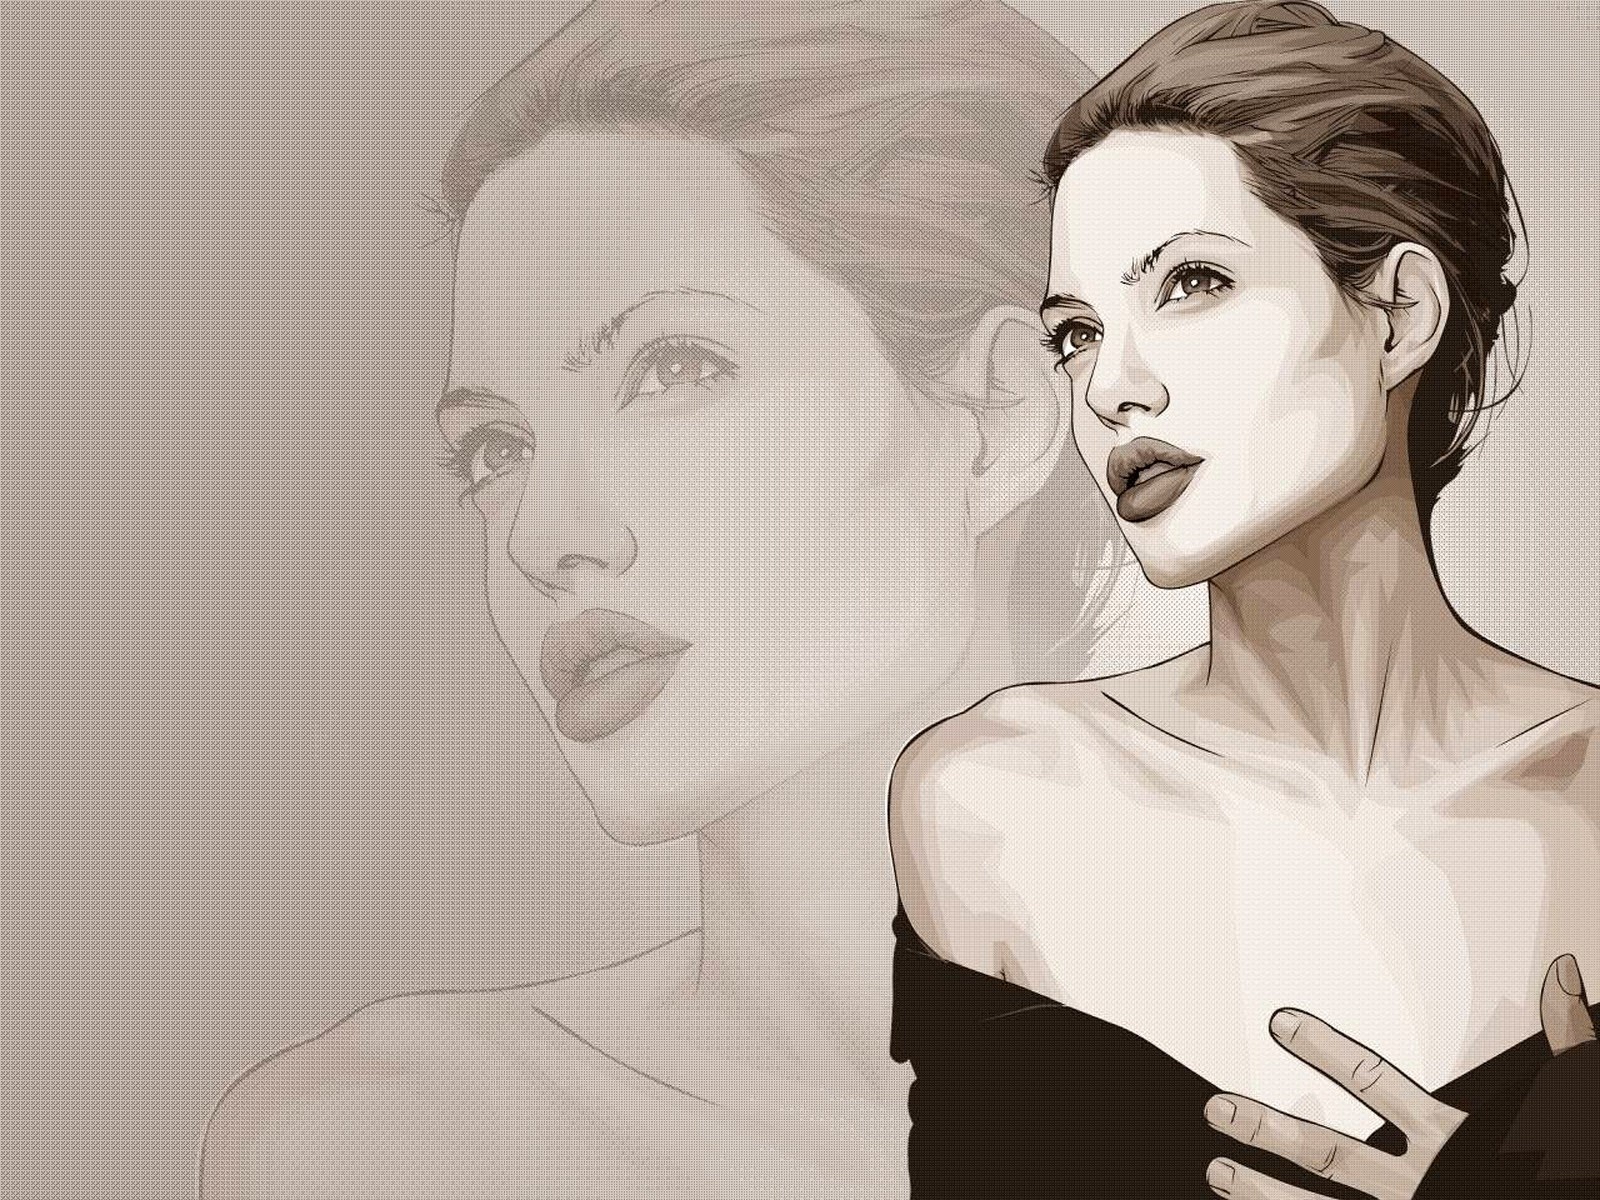 General 1600x1200 artwork Angelina Jolie actress American women face portrait bare shoulders brunette looking up women digital art juicy lips looking away short hair collarbone parted lips